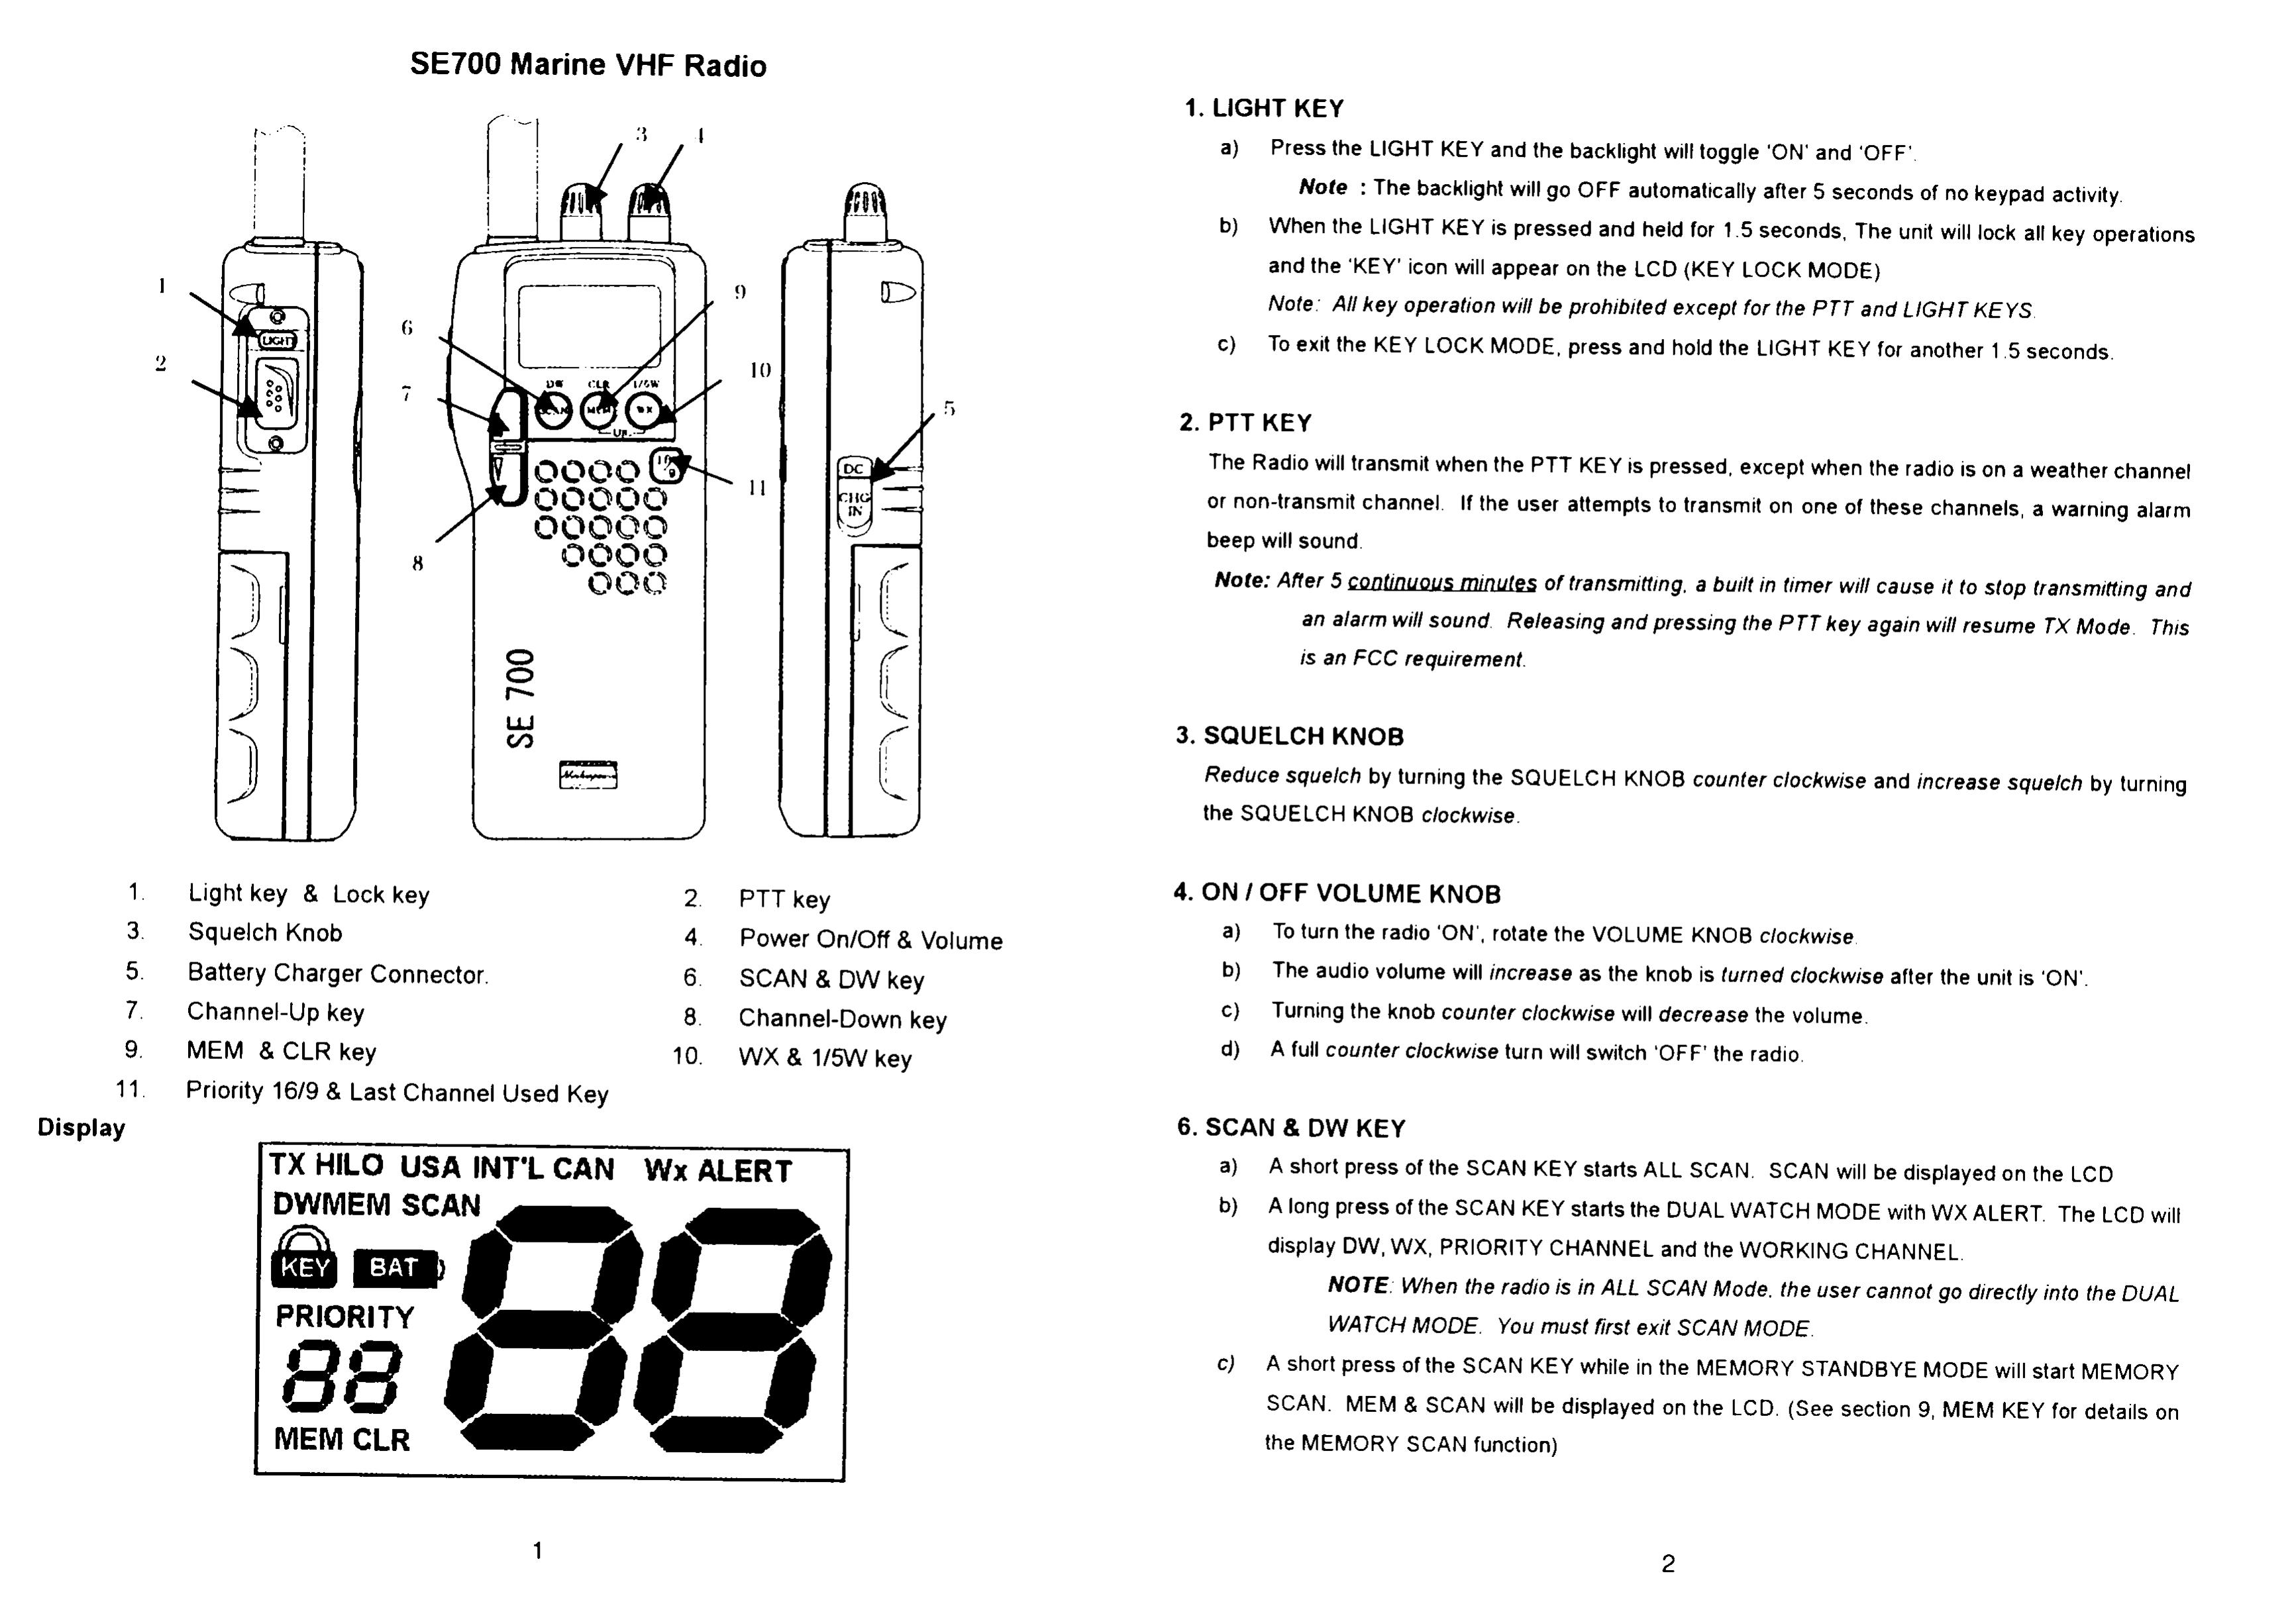 Shakespeare Electronic Model SE 700 Marine Radio User Manual